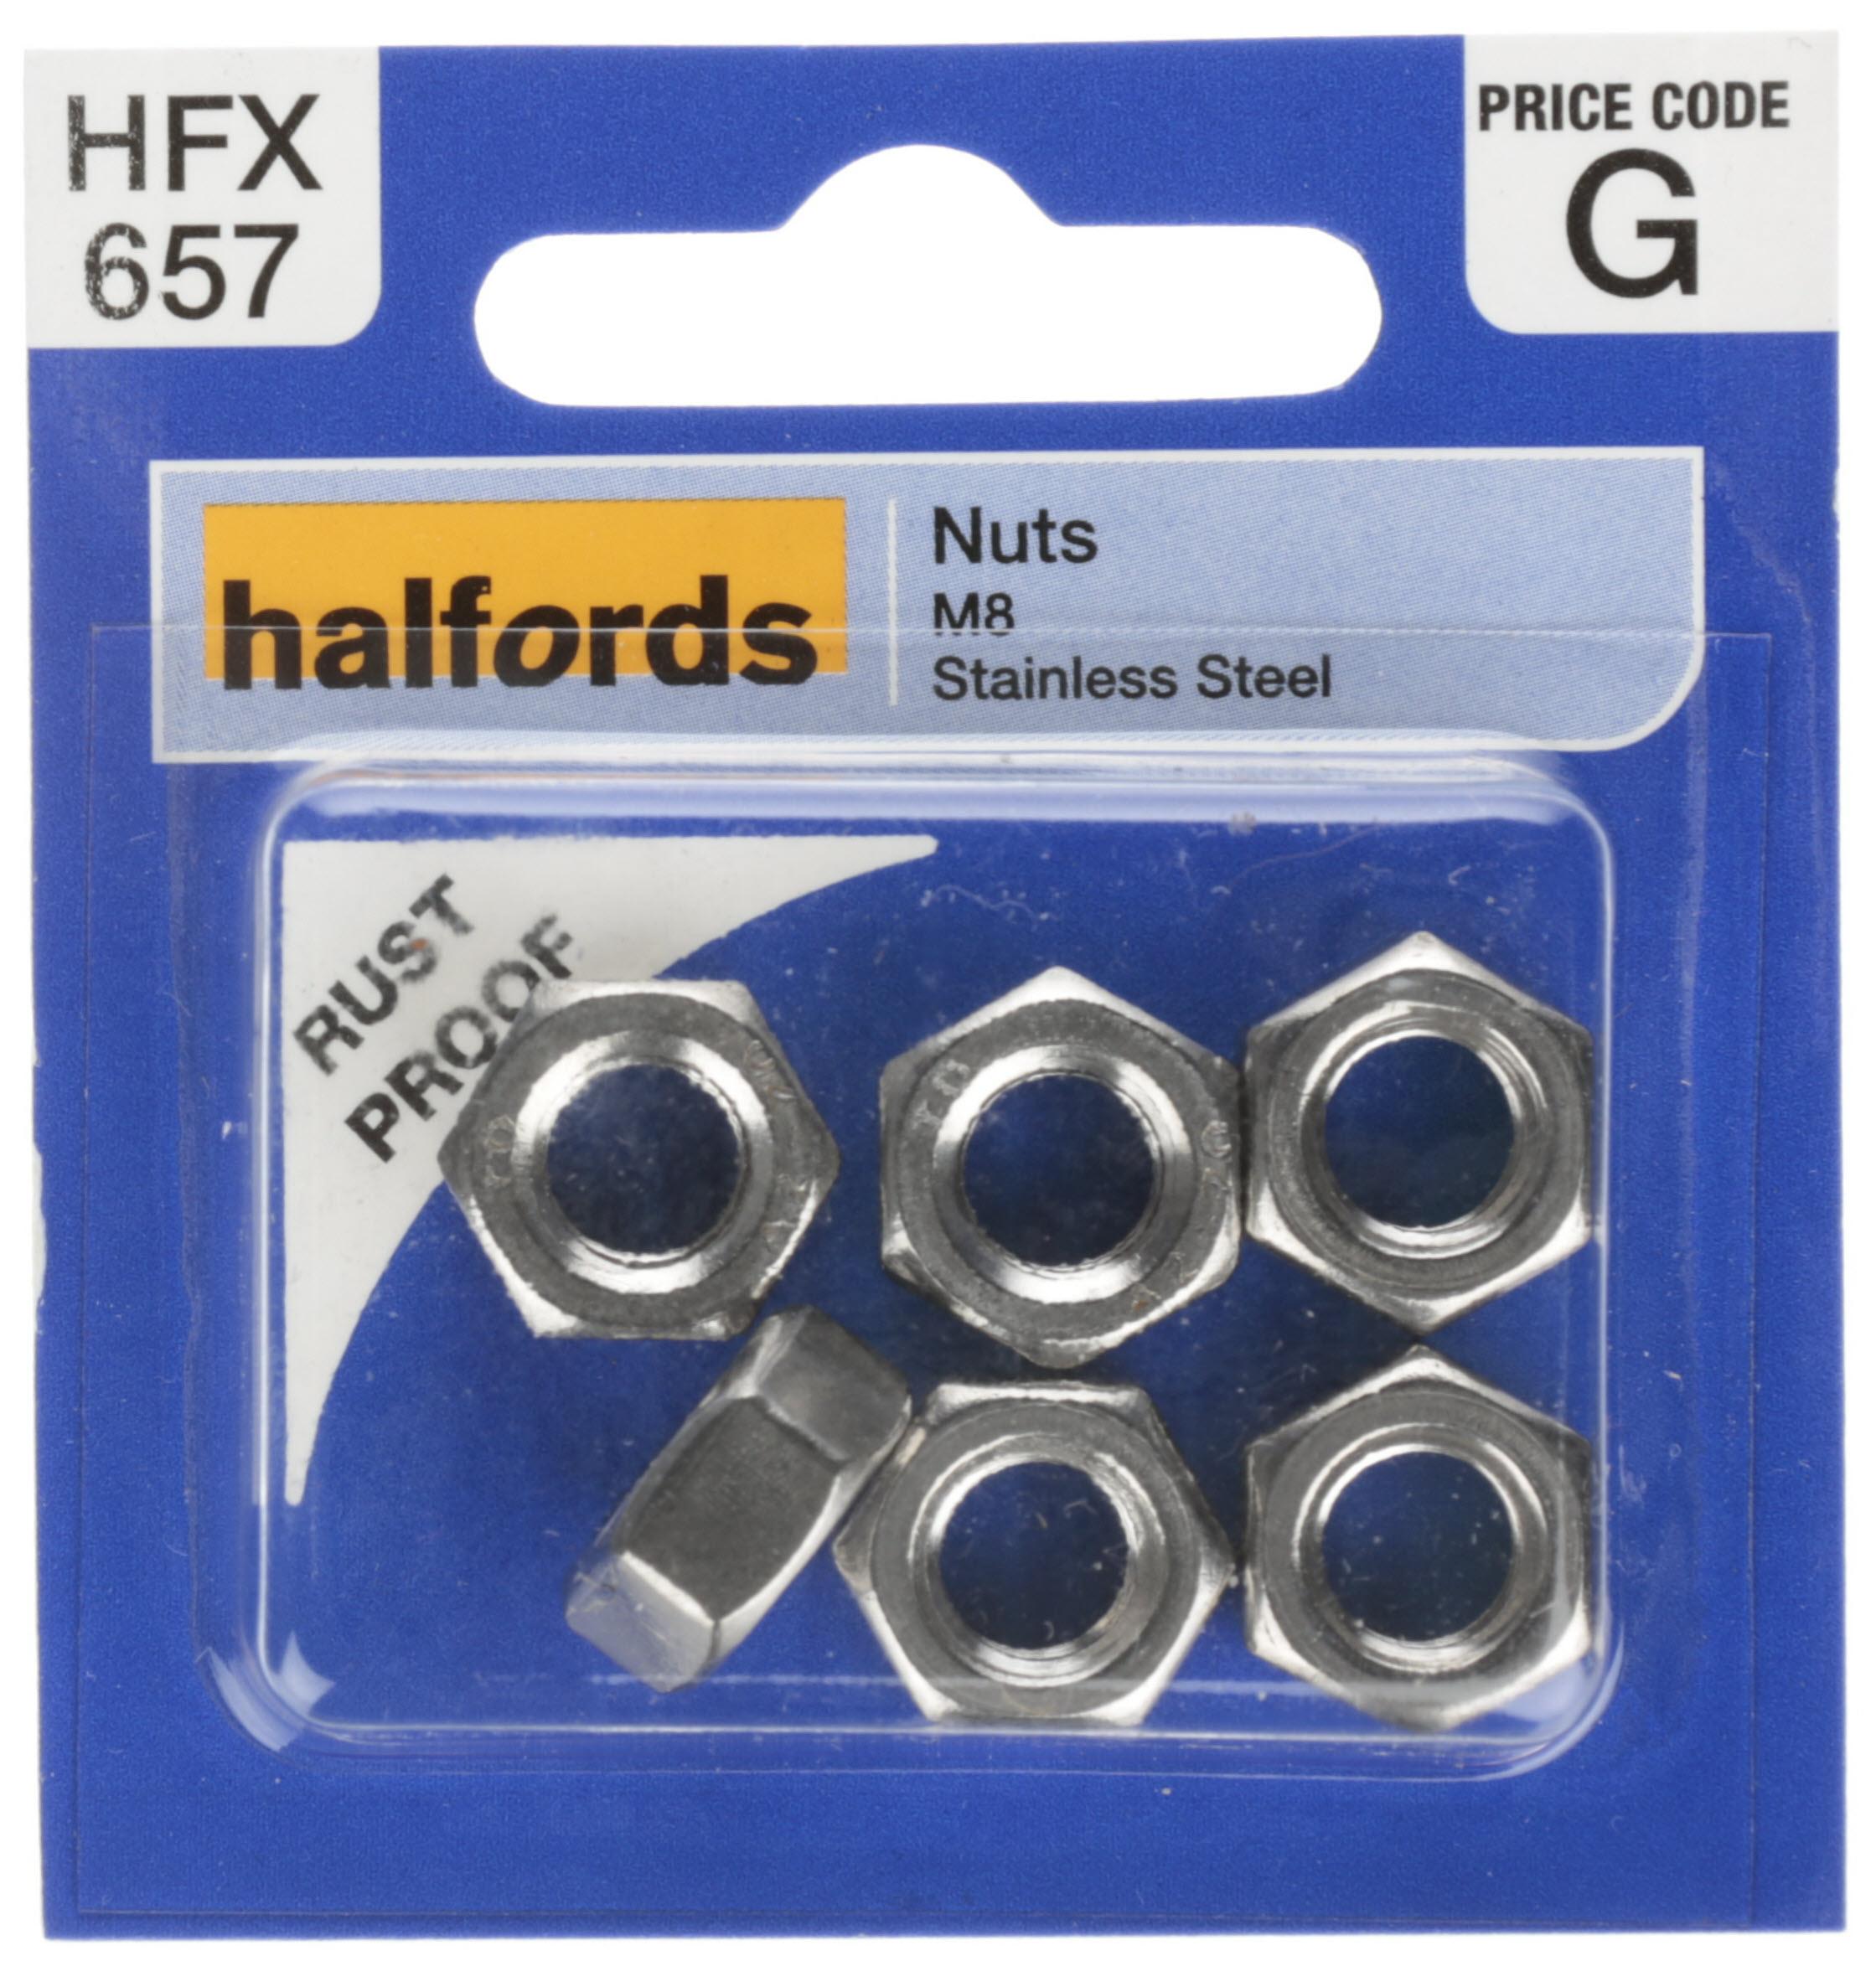 Halfords Nuts Stainless Steel M8 (Hfx657)